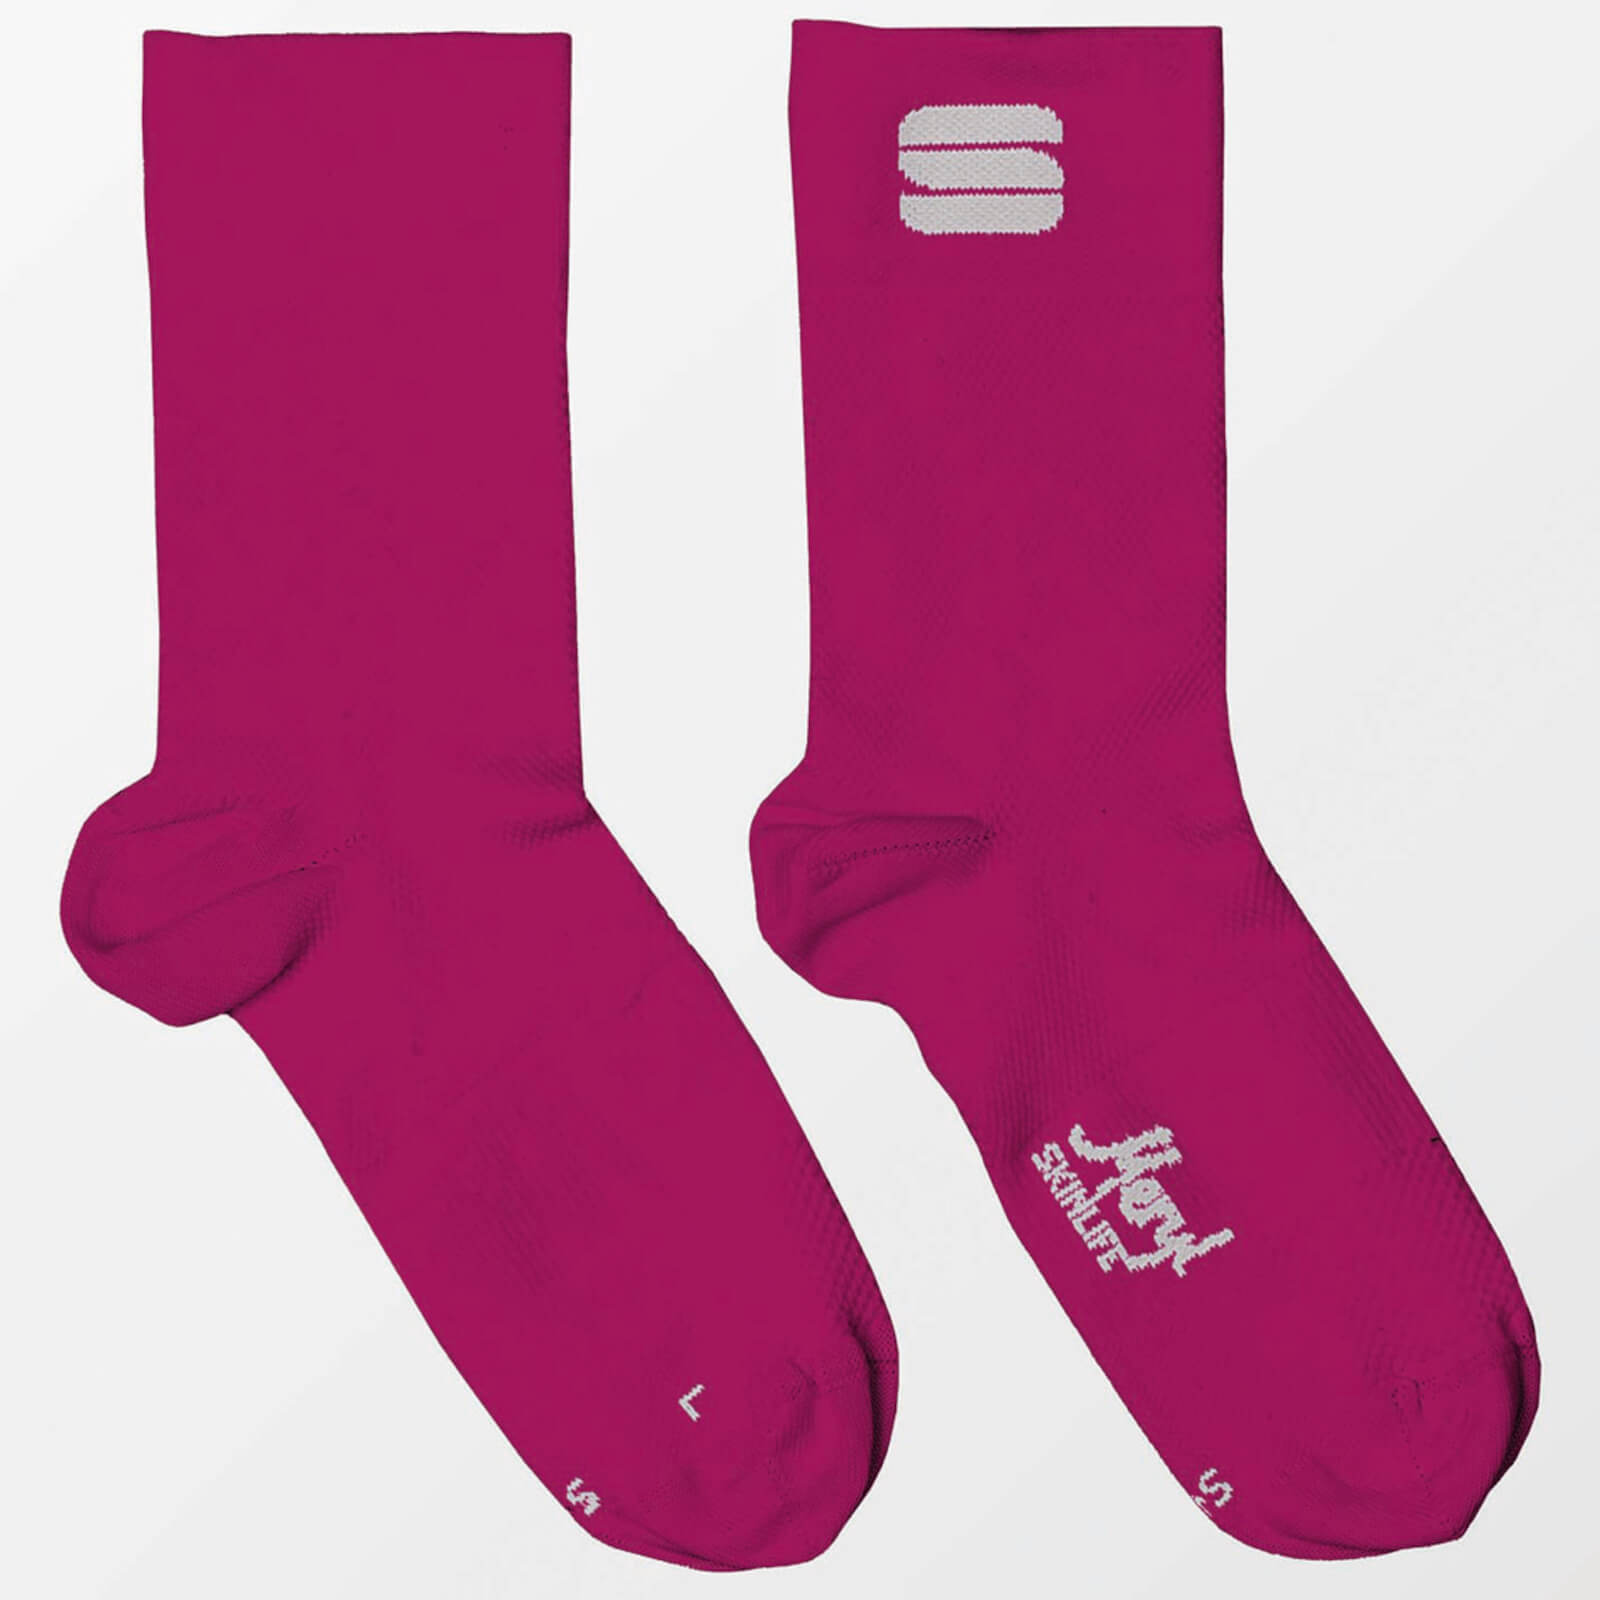 Sportful Women's Matchy Socks - L/XL - Cyclamen